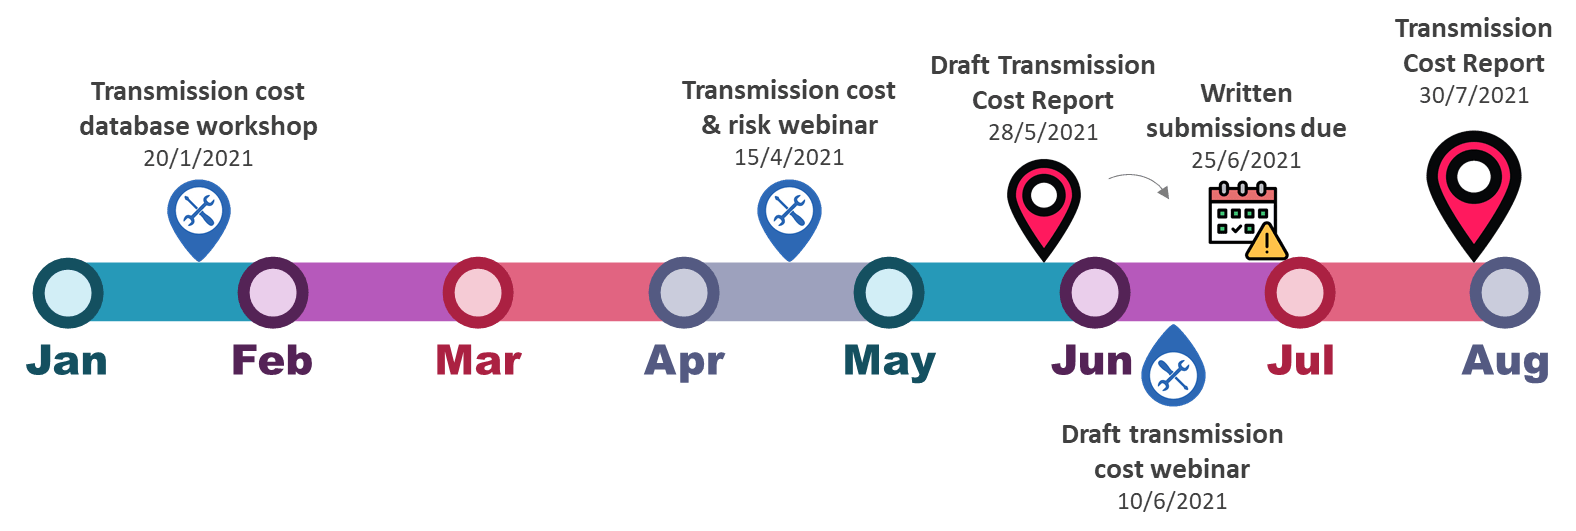 Transmission costs consultation timeline